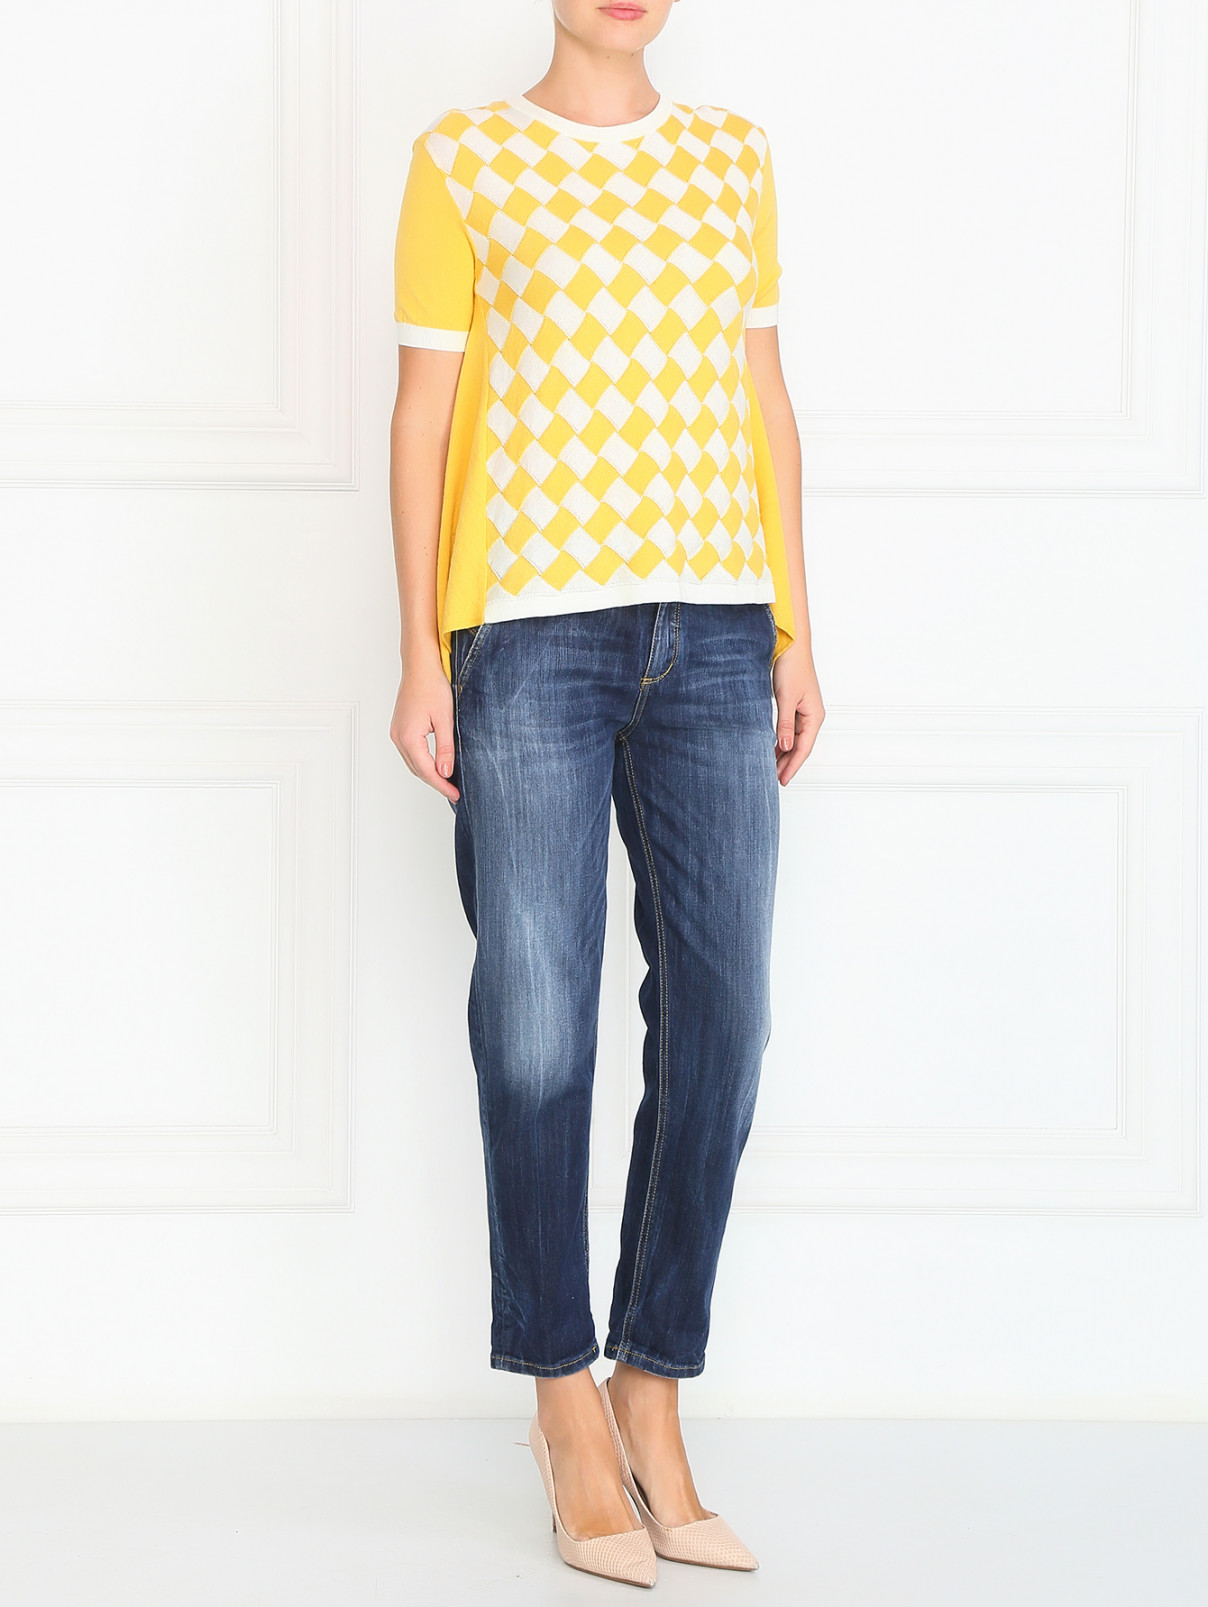 Джемпер с короткими рукавами и геометрическим узором Moschino Cheap&Chic  –  Модель Общий вид  – Цвет:  Желтый